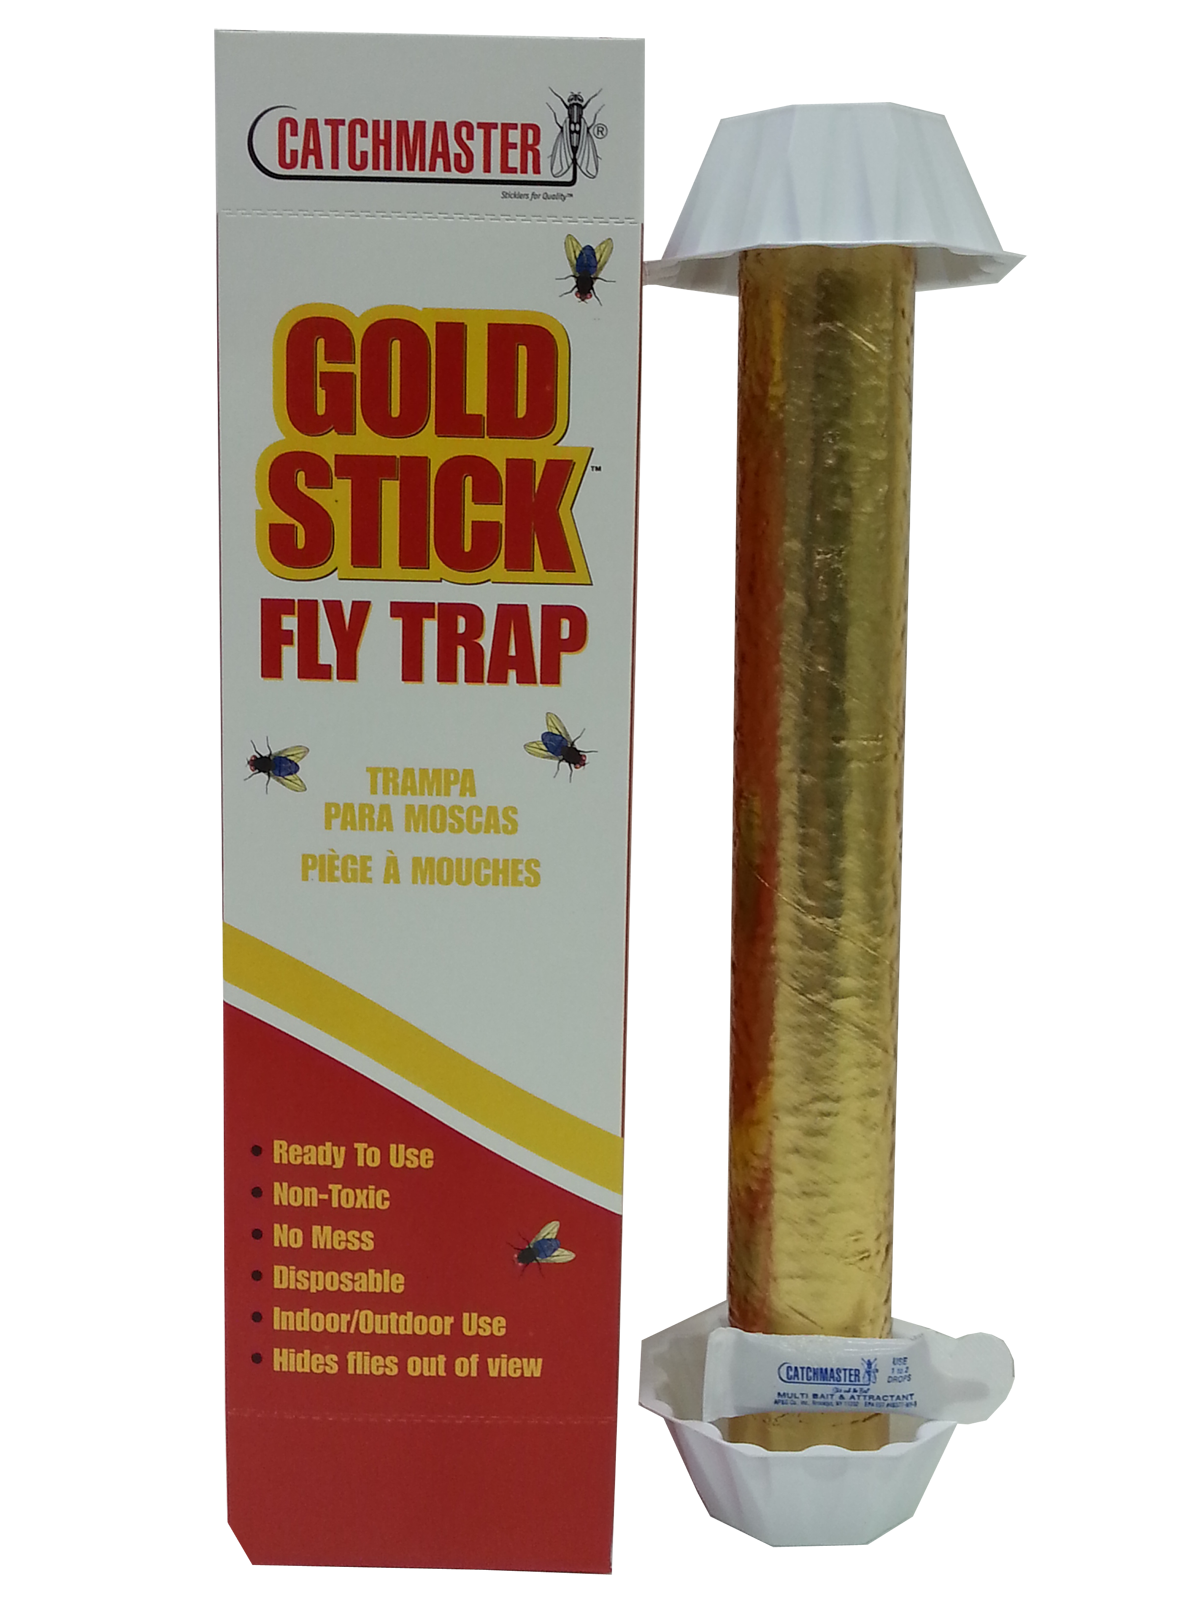 Catchmaster Gold Stick 962 Large Glue Fly Trap Fly Pheromone